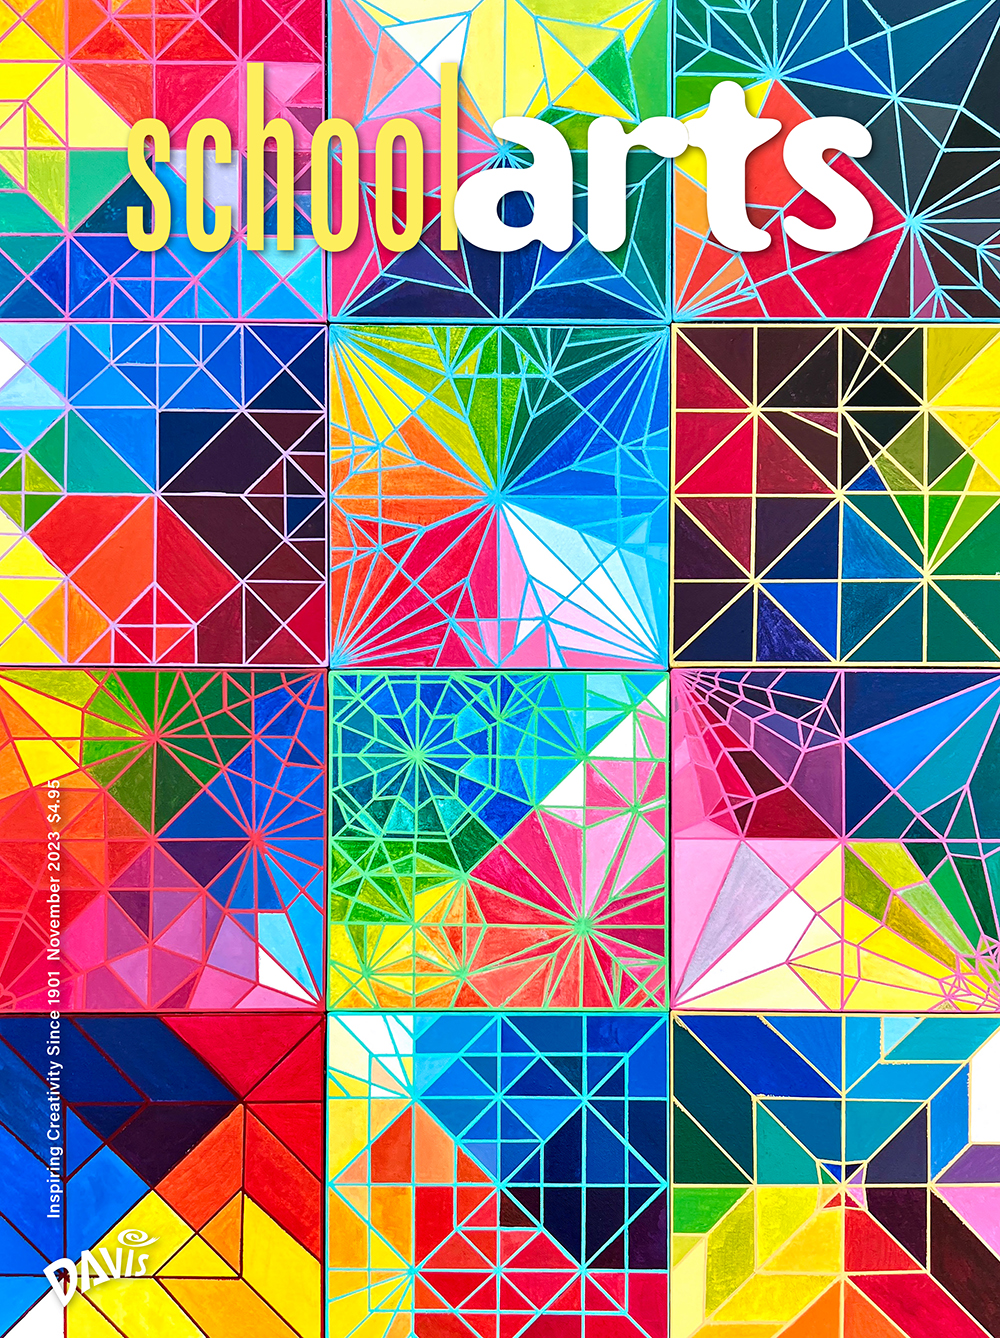 SchoolArts magazine